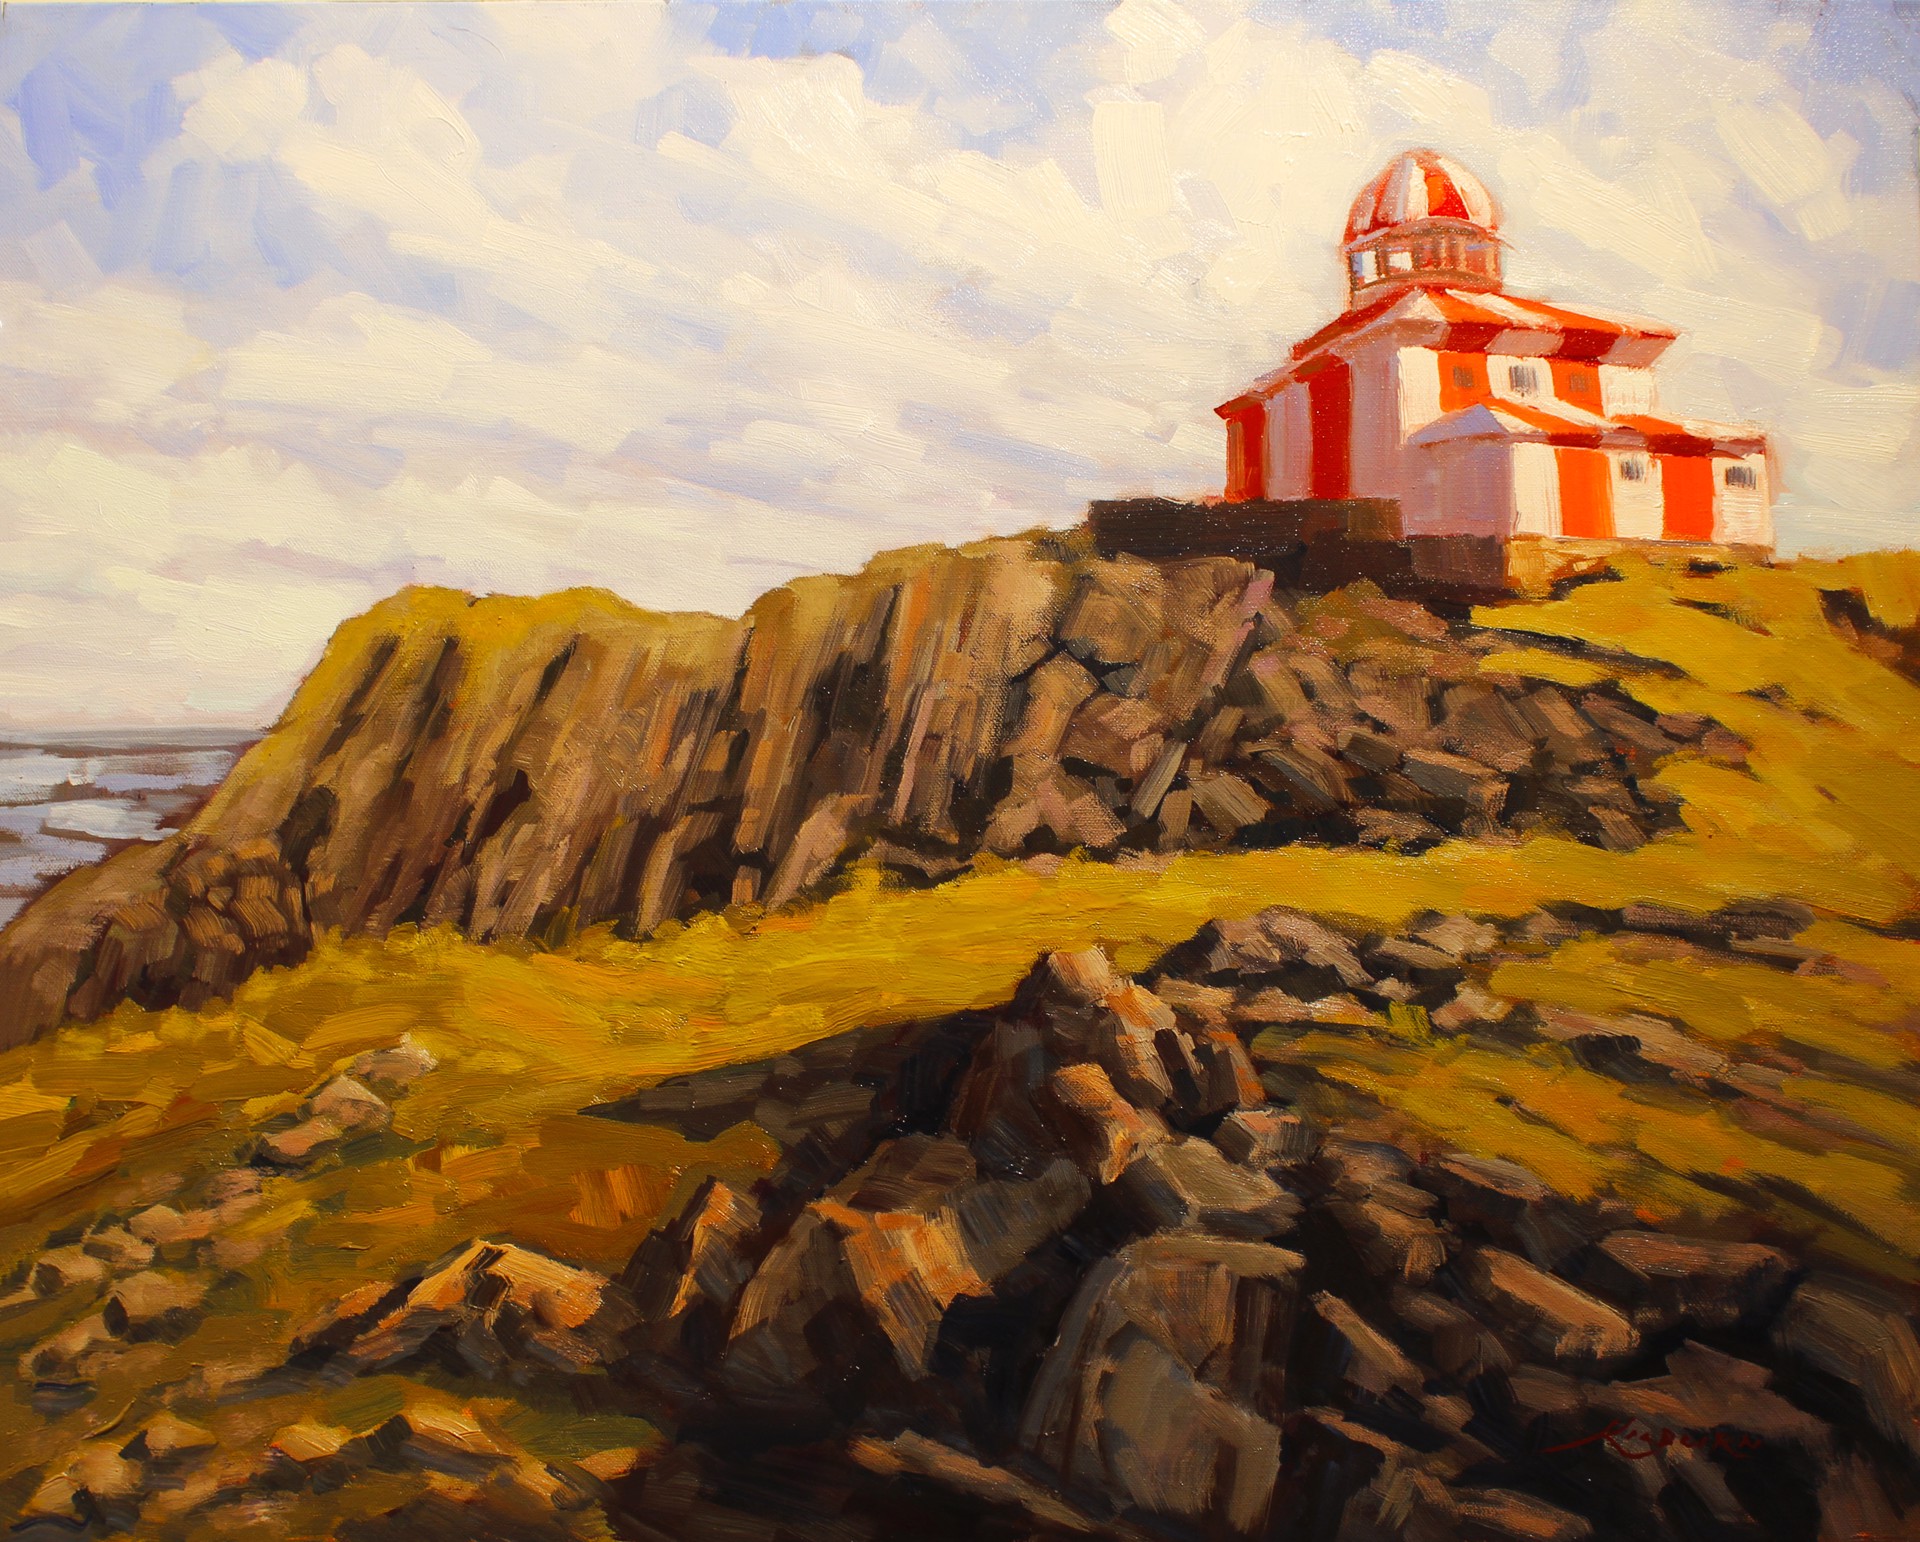 Cape Bonavista Lighthouse by Michael Kilburn